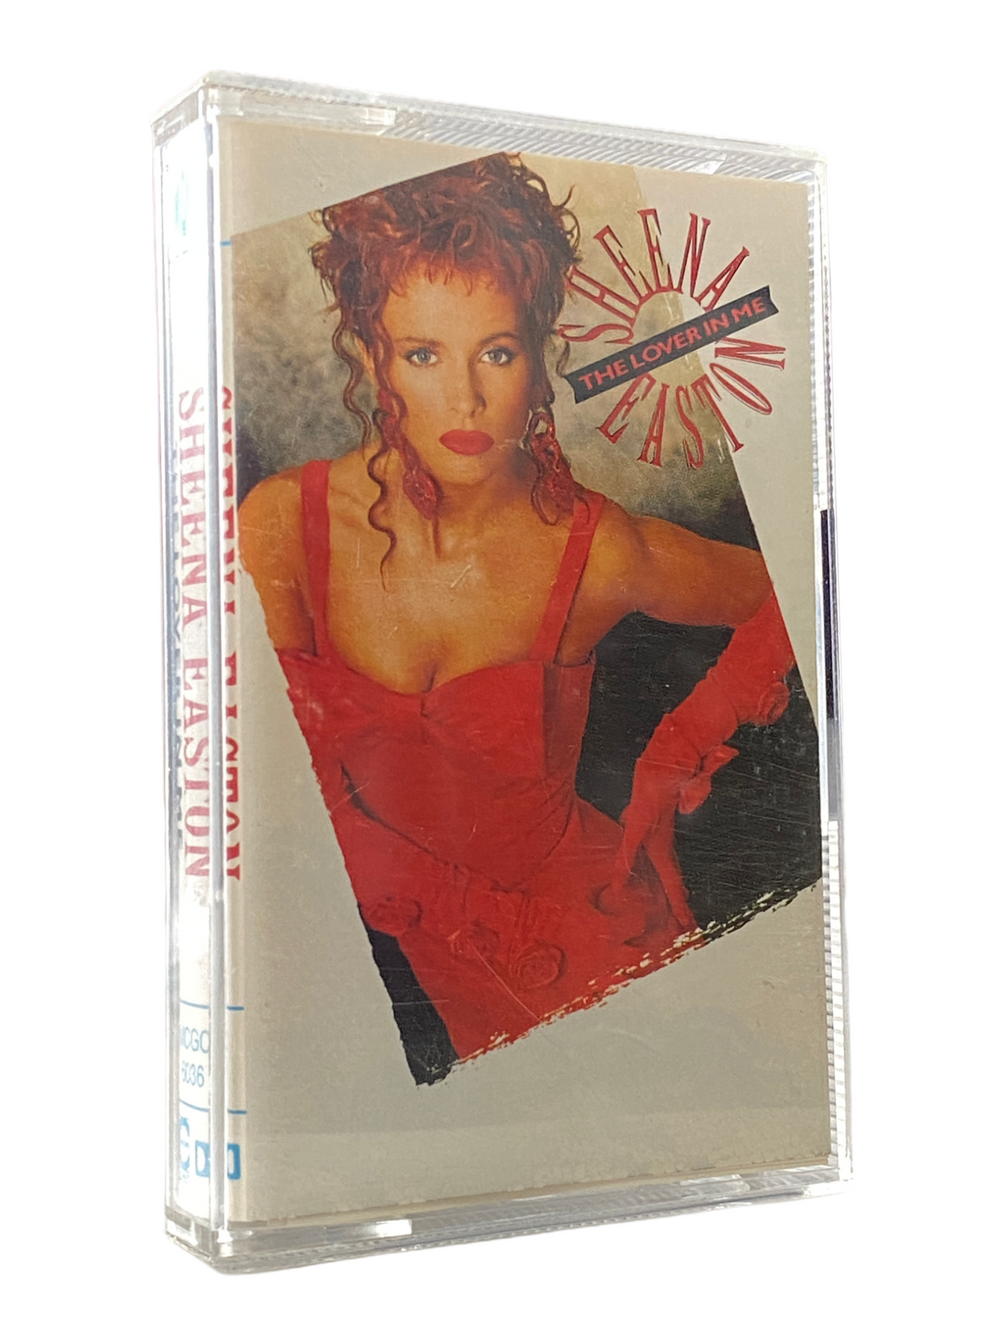 Prince – Sheena Easton The Lover In Me Original Cassette Tape UK 1988 Release Prince